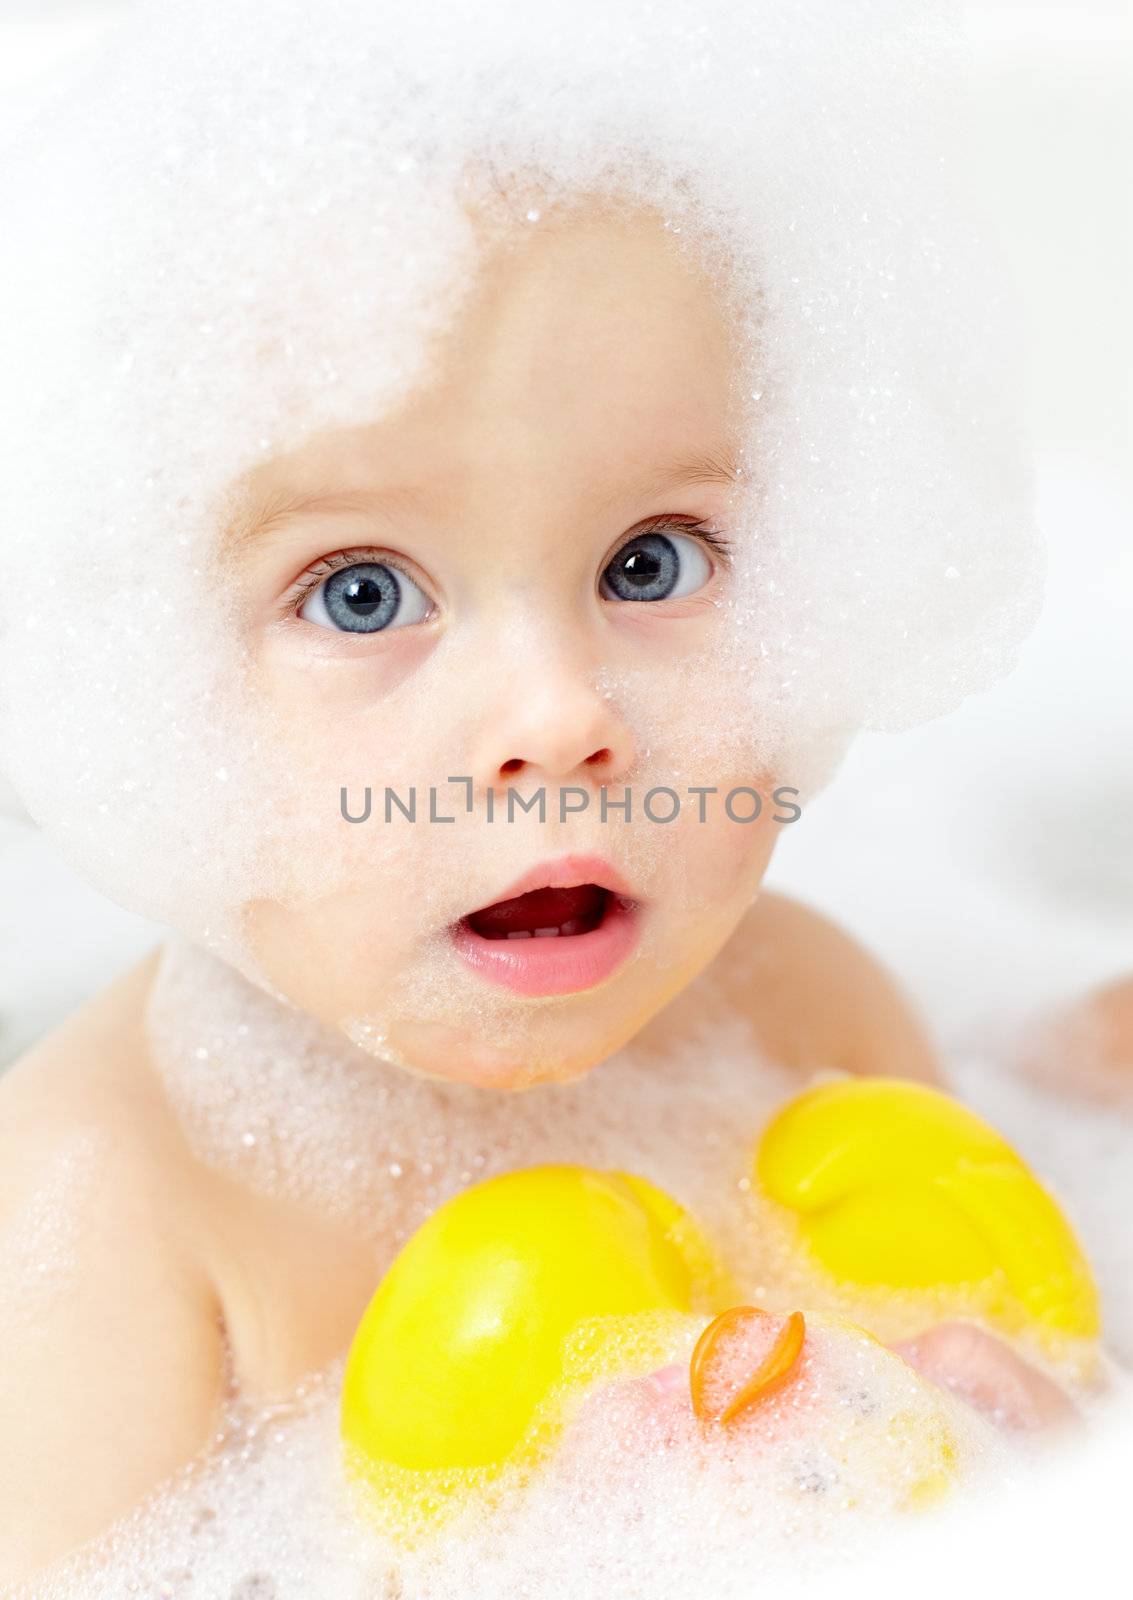 Baby bathing by naumoid